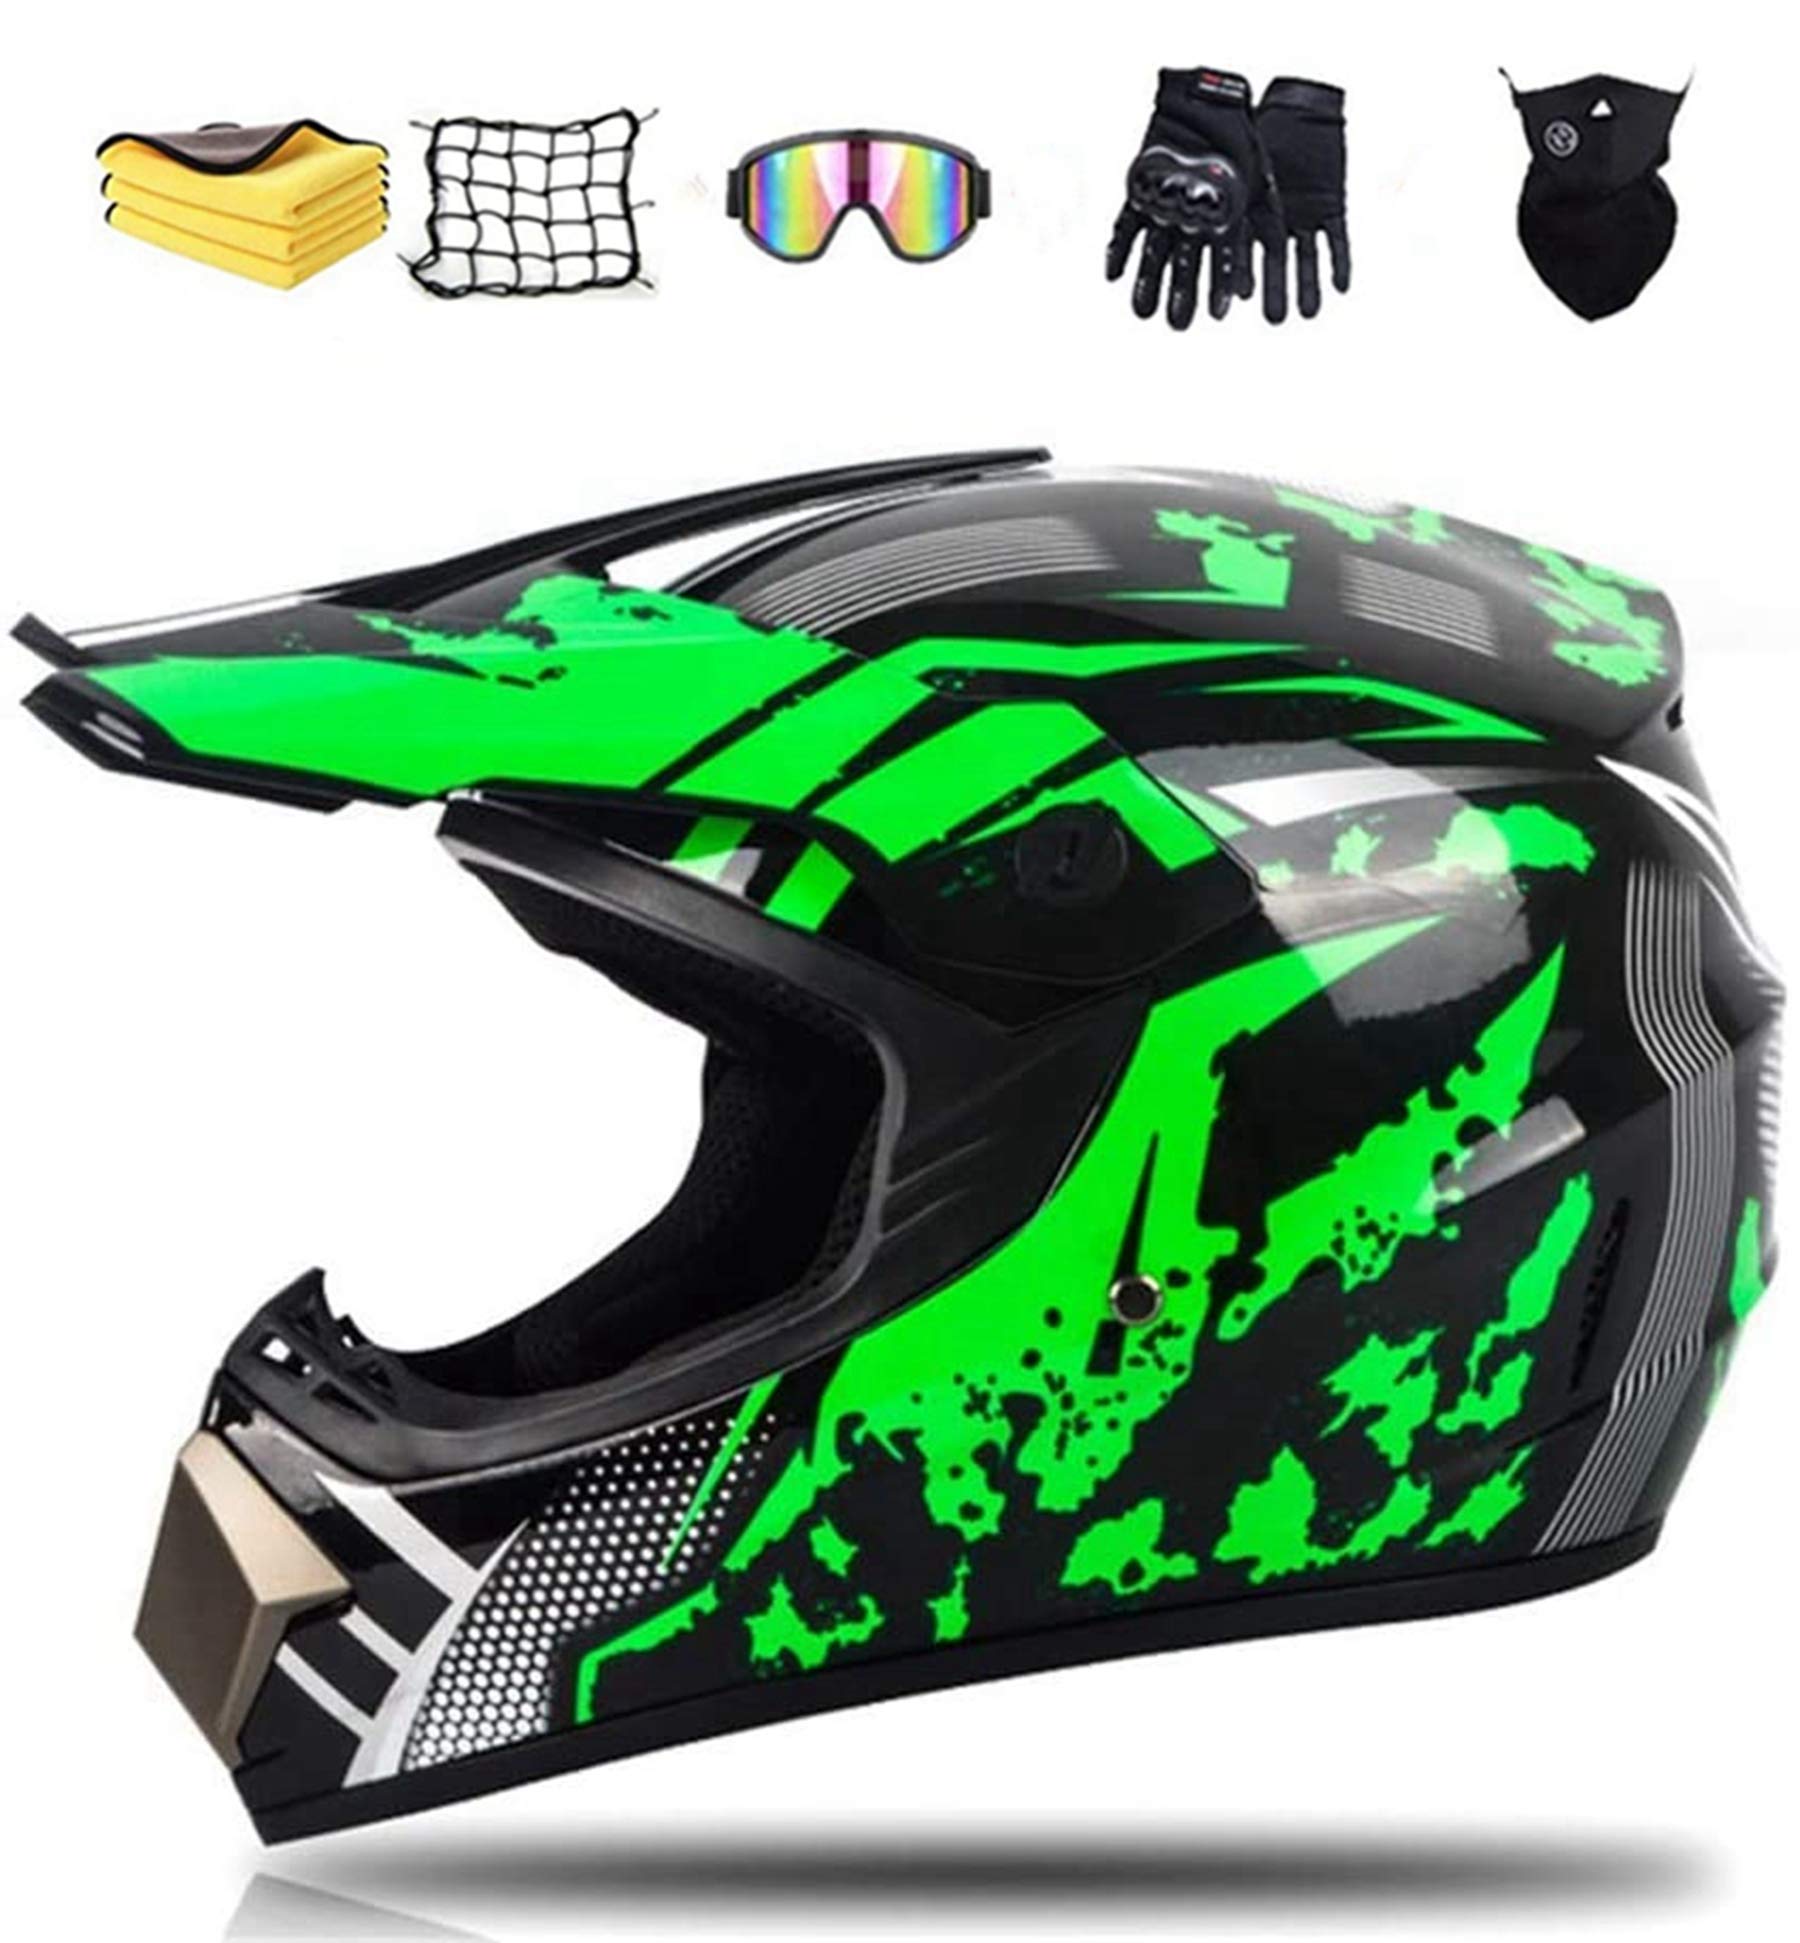 Motocross Helm Set, Fullface MTB Helm Kinder Cross Helm Motorradhelm, mit Brille Handschuhe Maske Korallenvlies Handtuch Motorrad Netz (S) von NJYBF